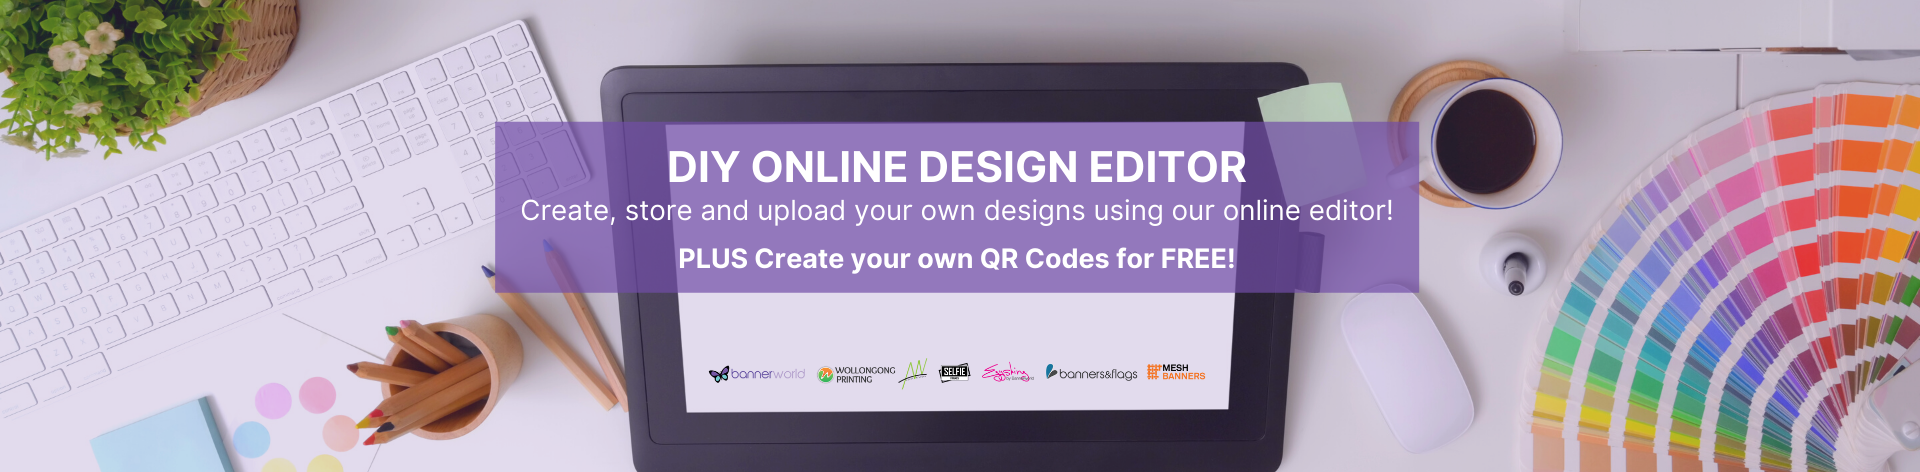 DIY Online Design Editor